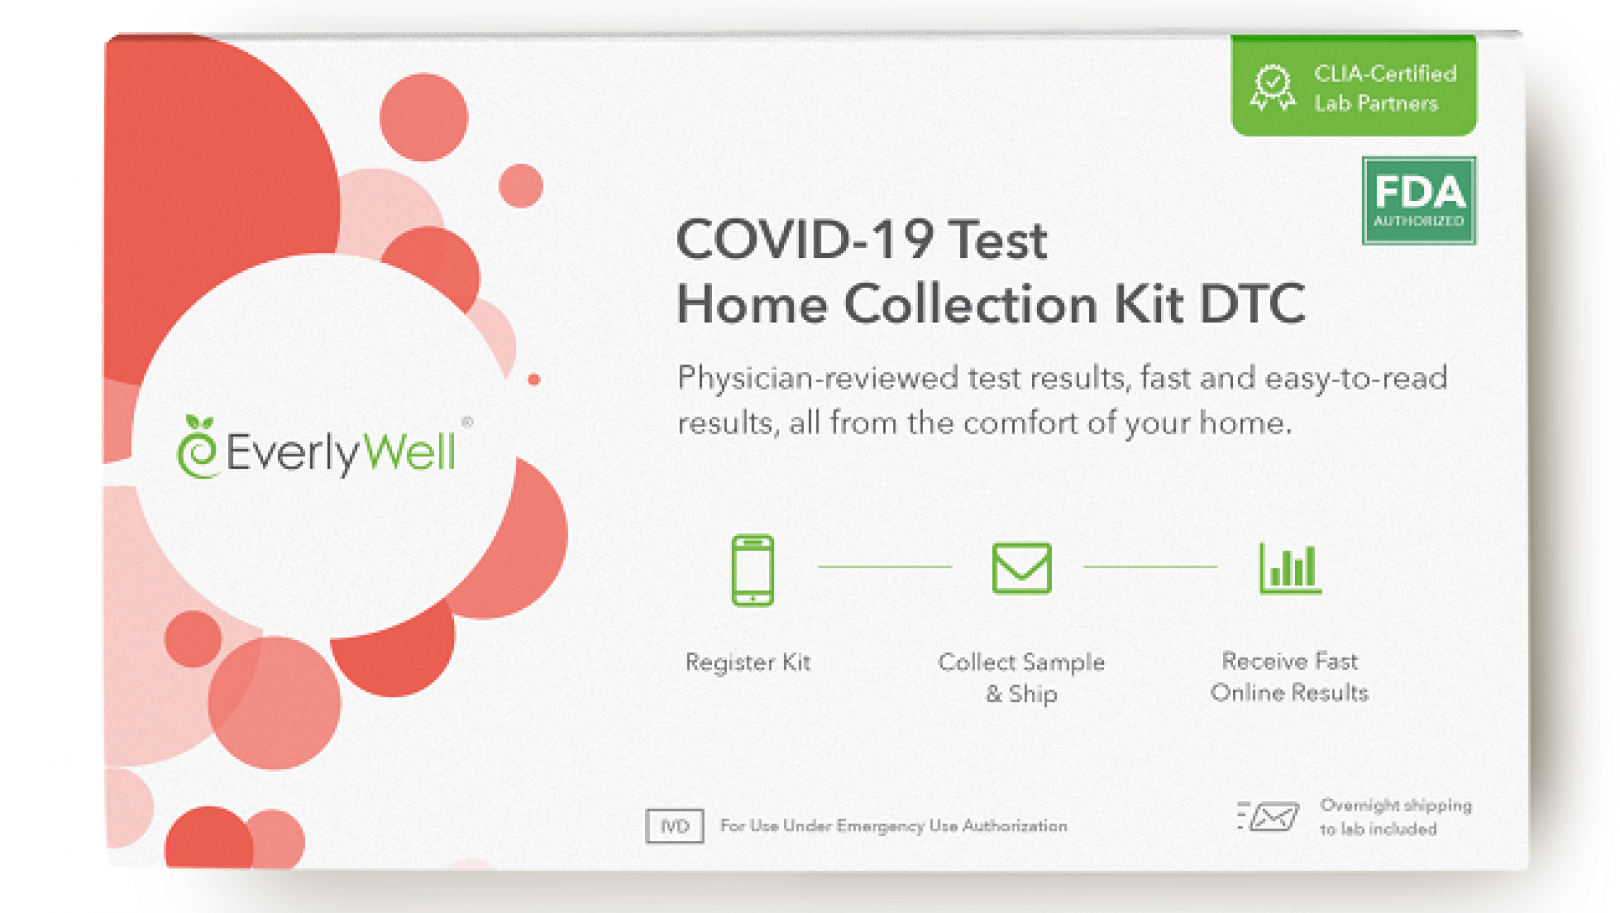 Everlywell COVID-19 Test kit